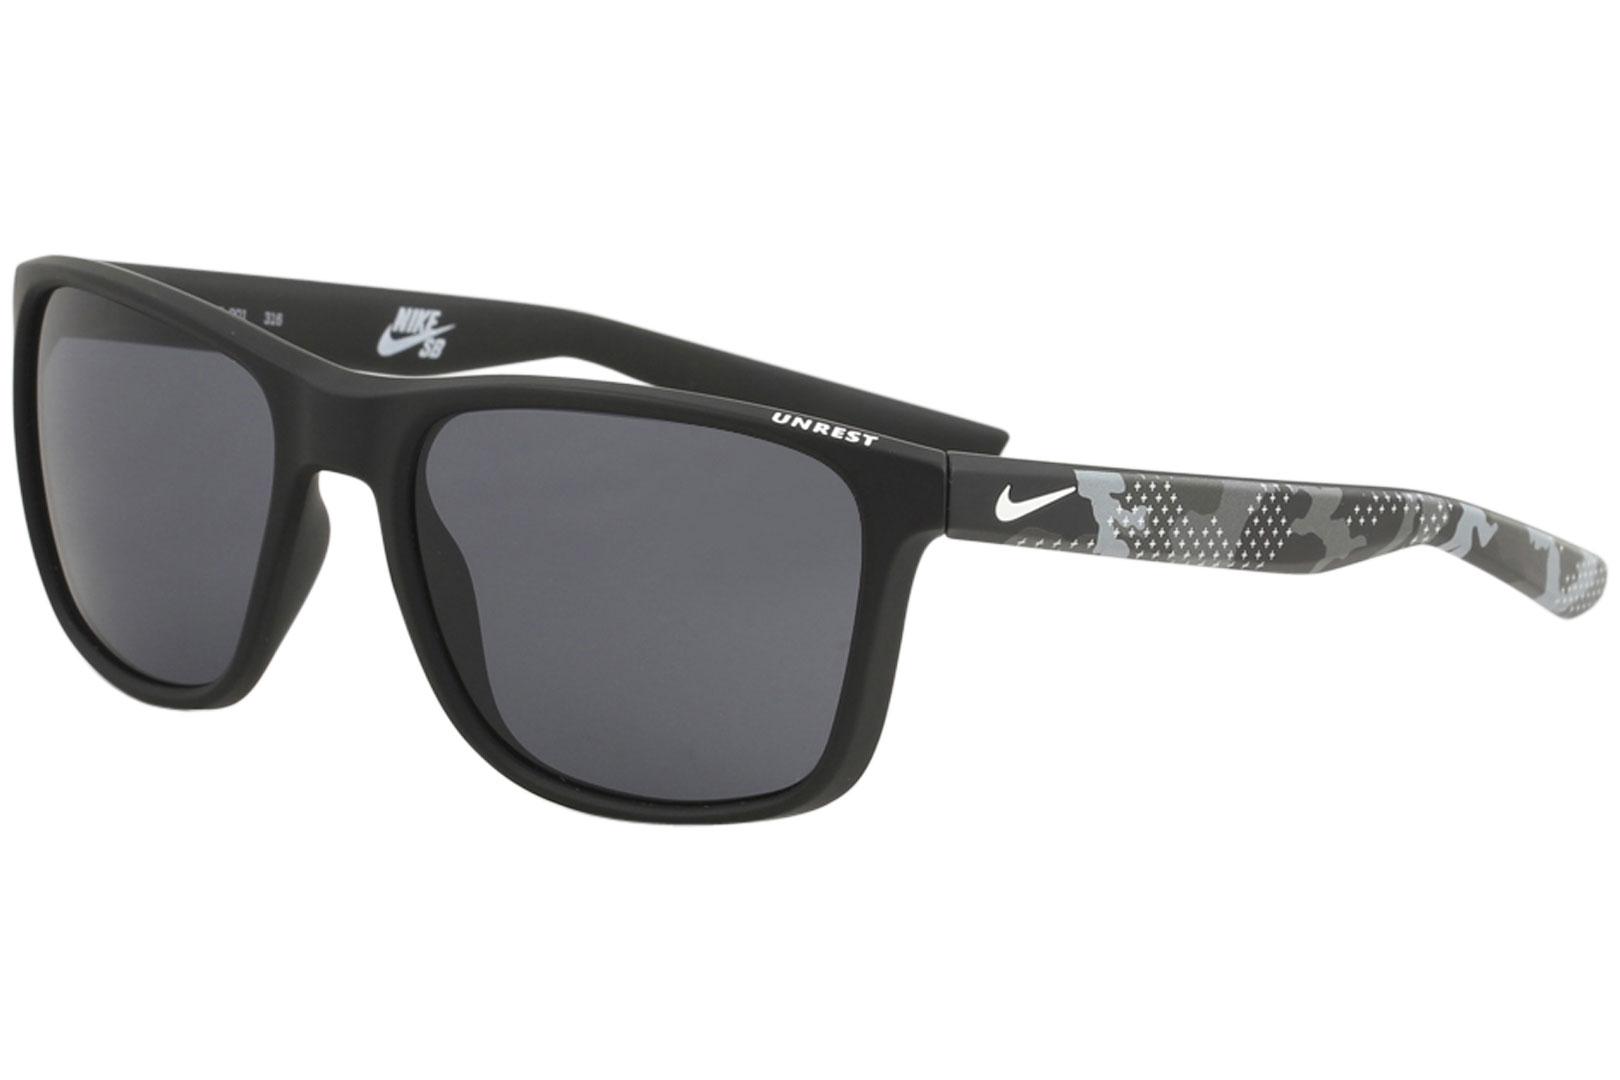 Nike SB Men's Unrest Square Sunglasses - Matte Black Camo/Dark Grey   001 - Lens 57 Bridge 19 Temple 145mm